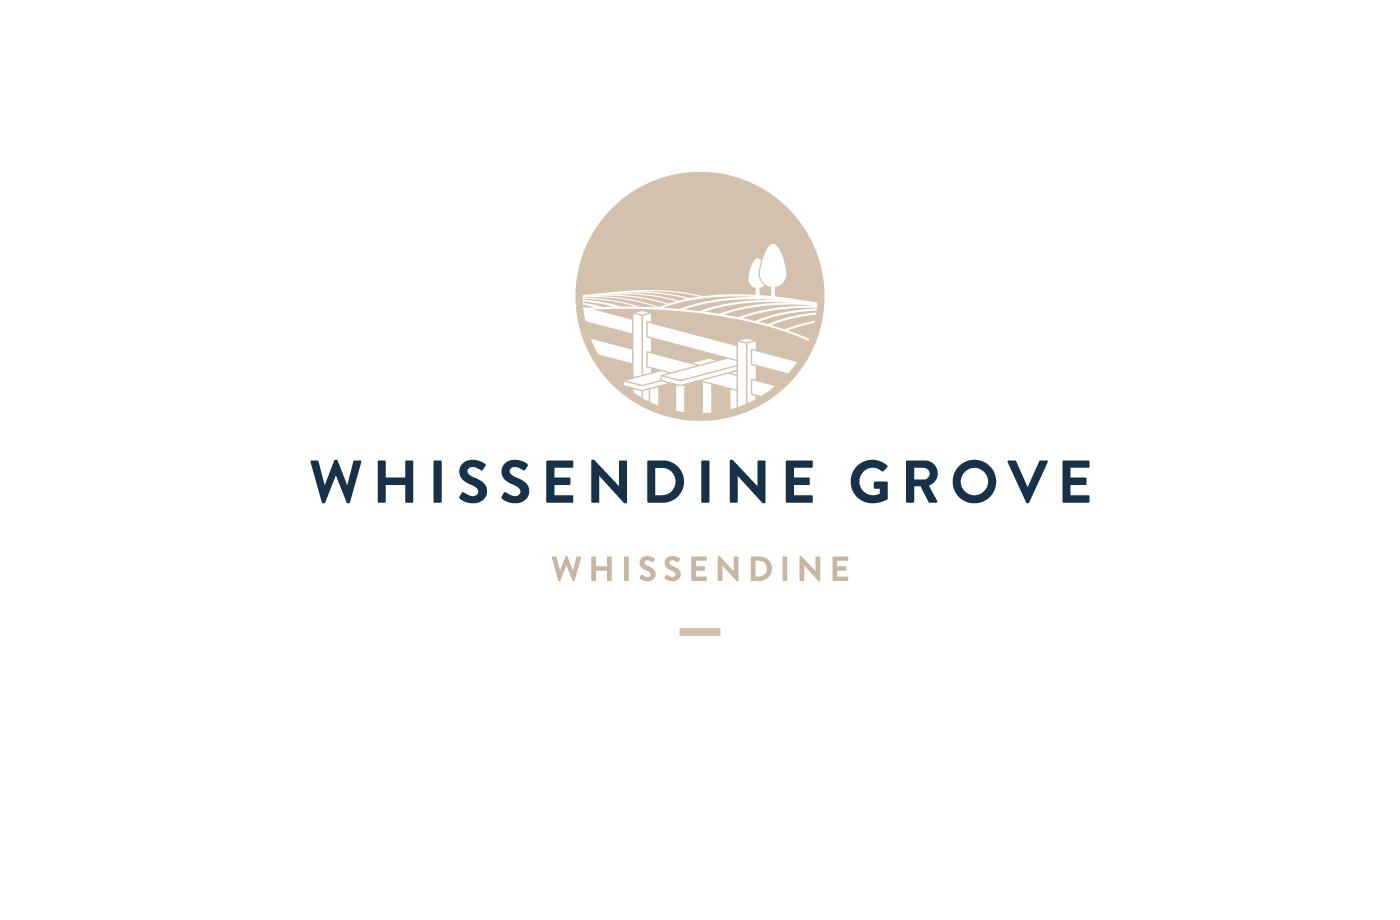 Whissendine Grove